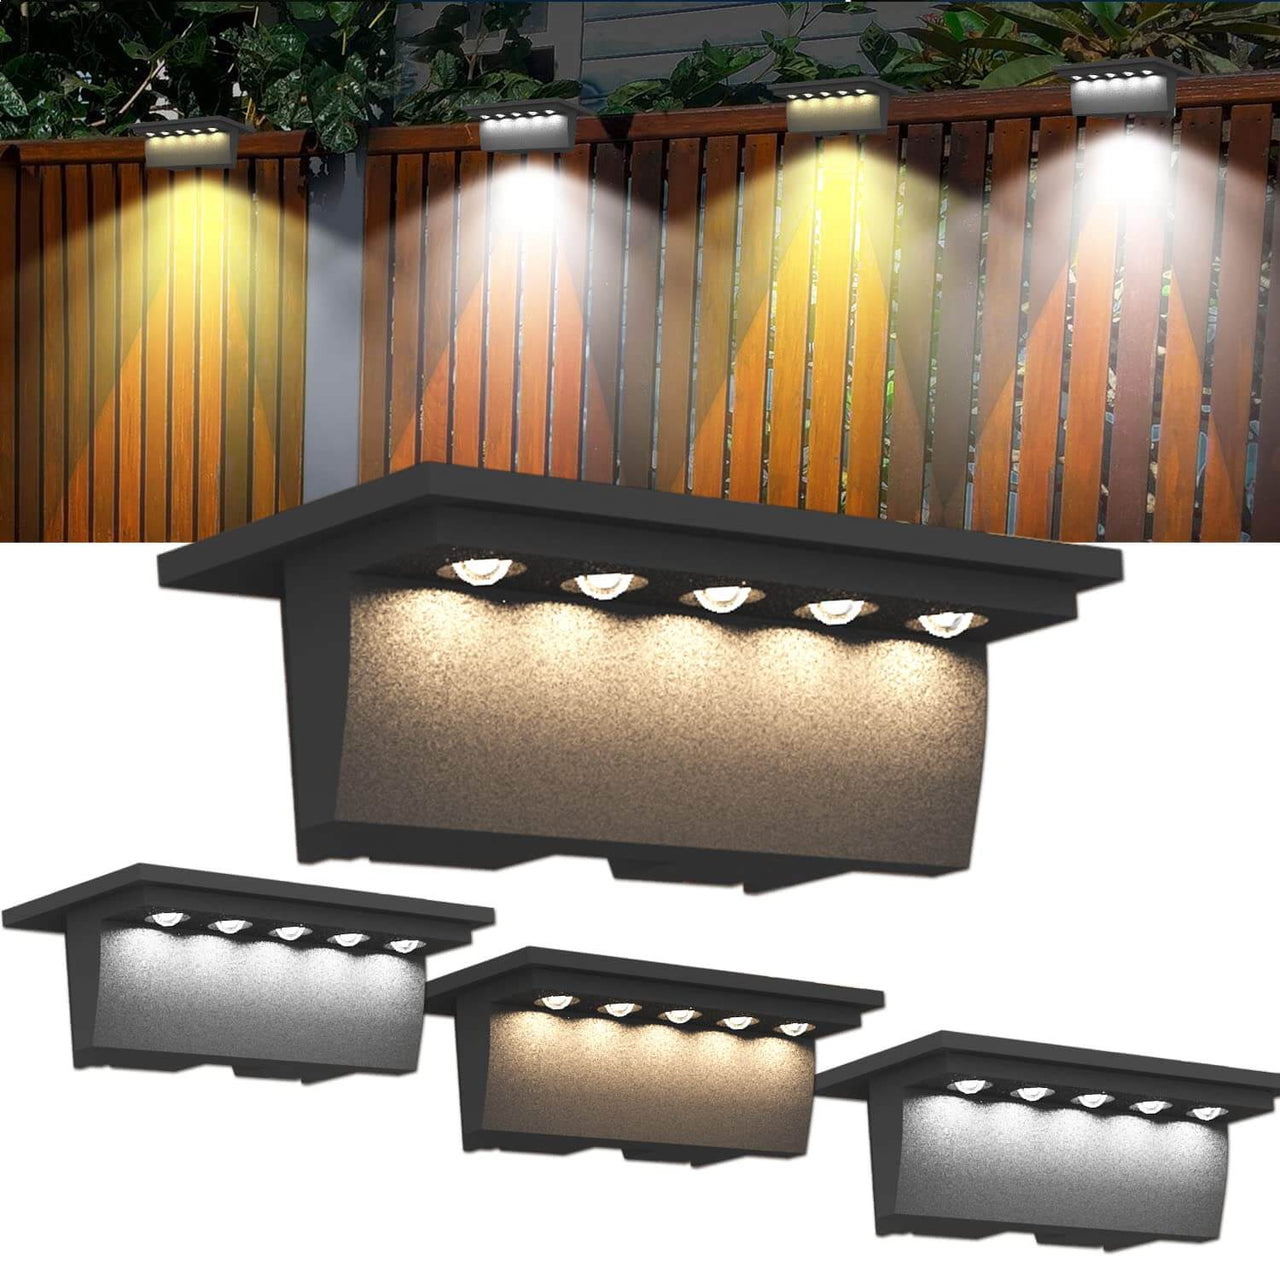 5 LED Solar Fence Lights Outdoor Fence Lights Warm White Color